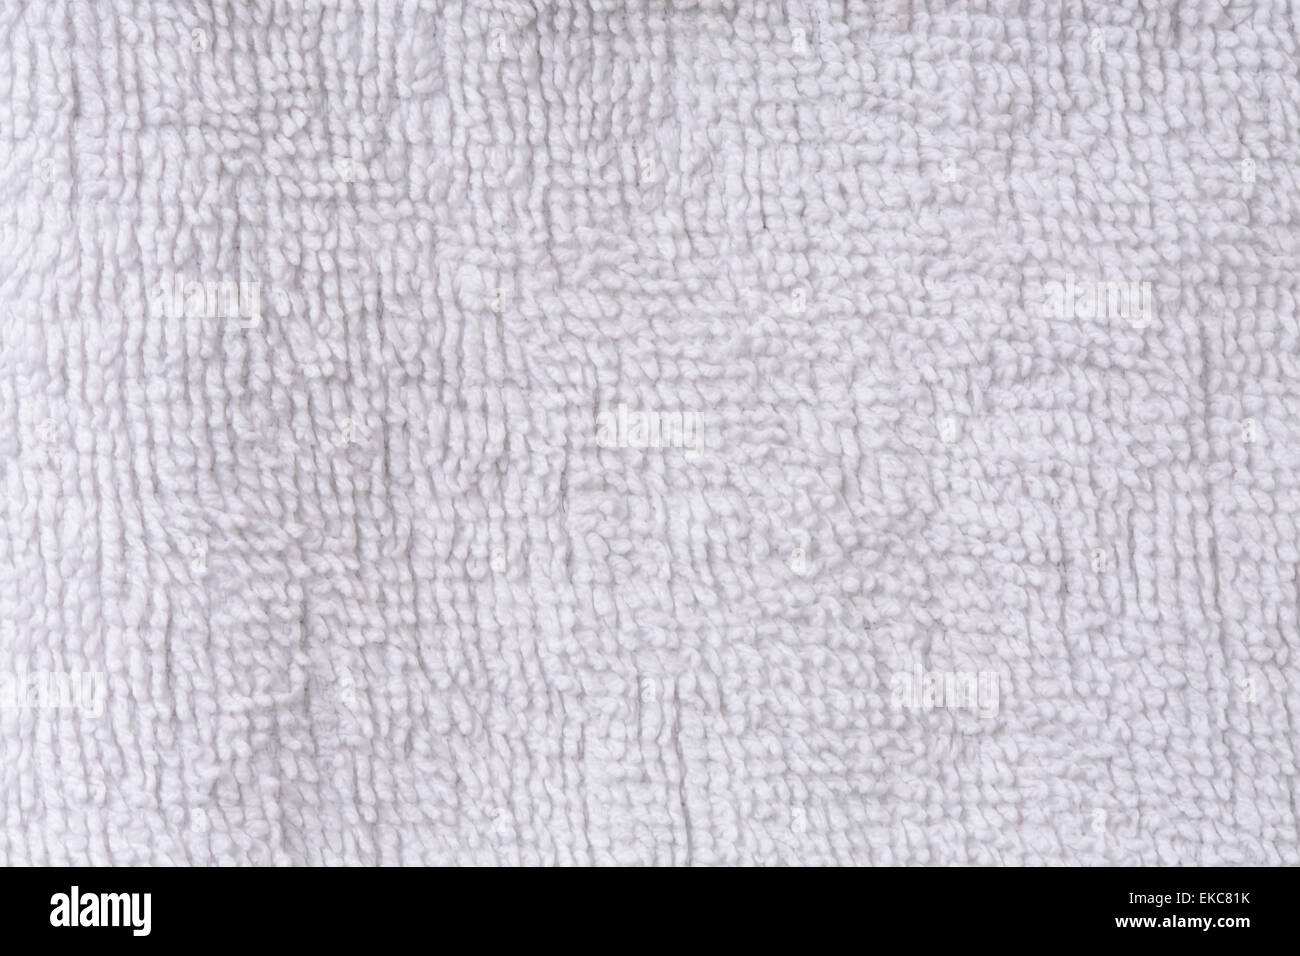 New white rug background texture Stock Photo